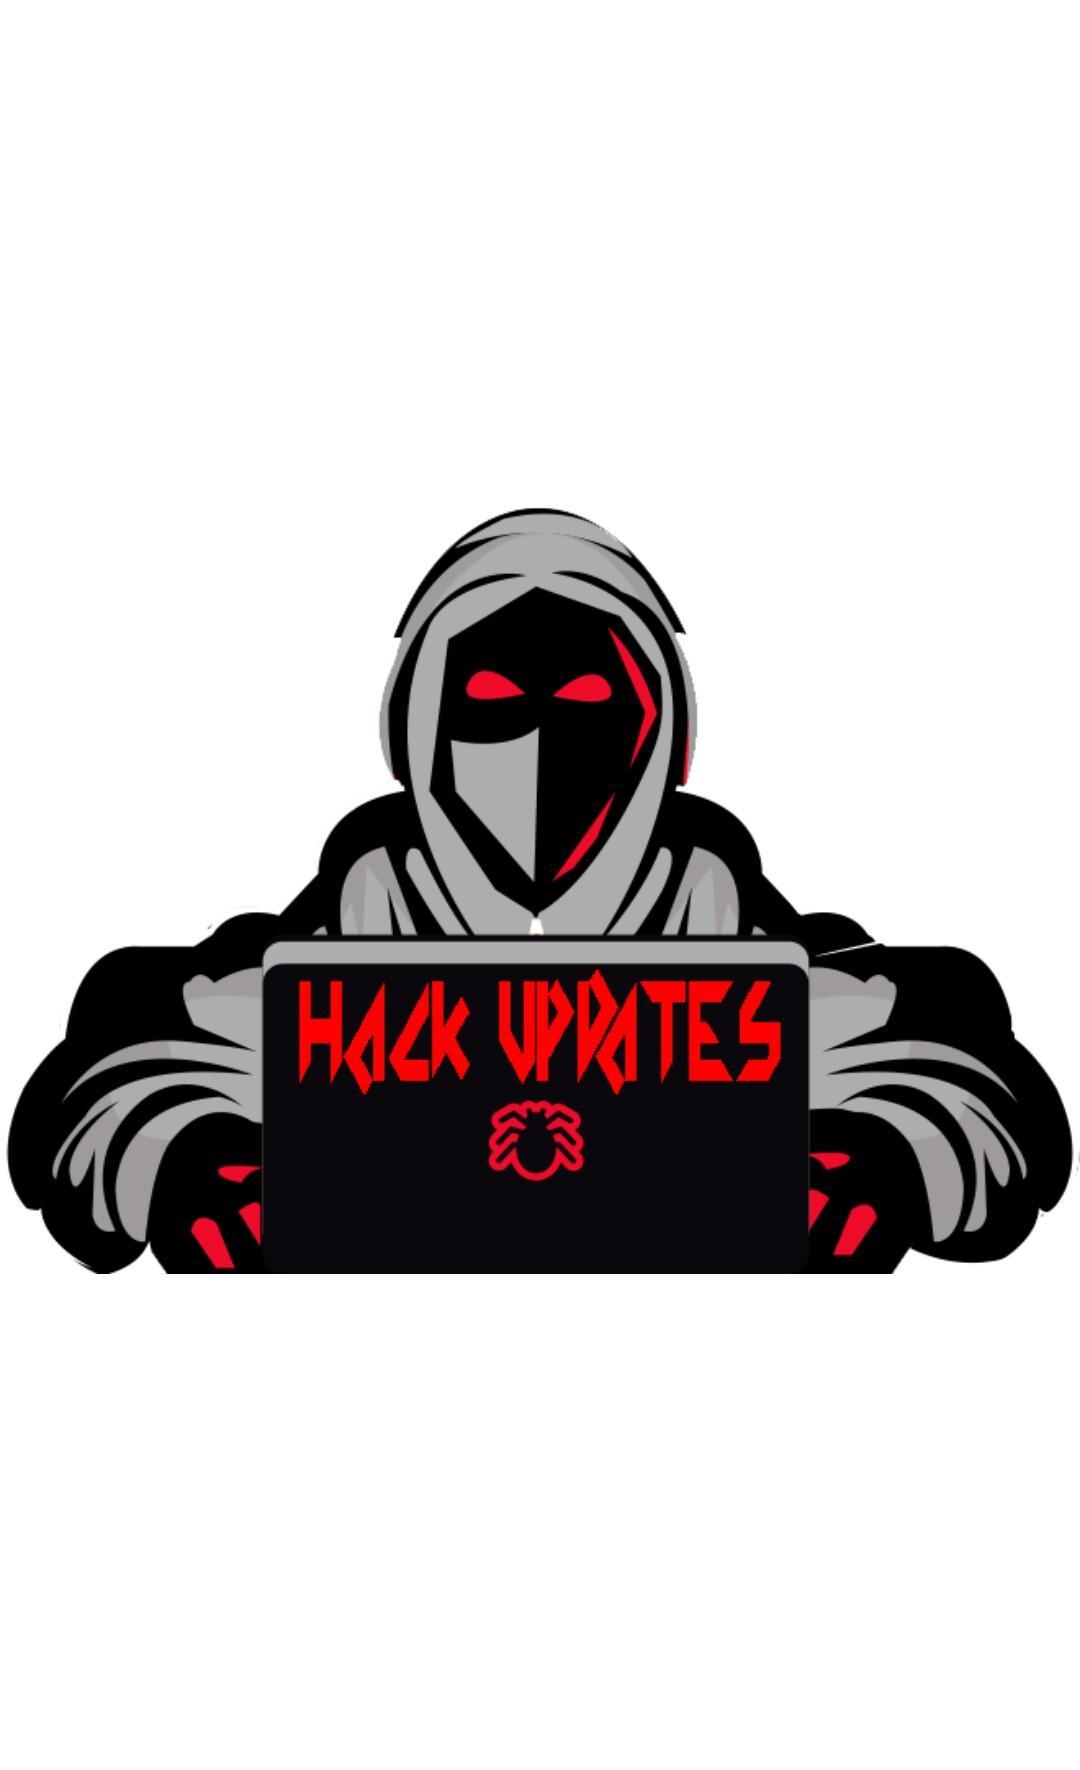 Hack Me Apk - outwitt roblox hack robux generator no human verification 2018